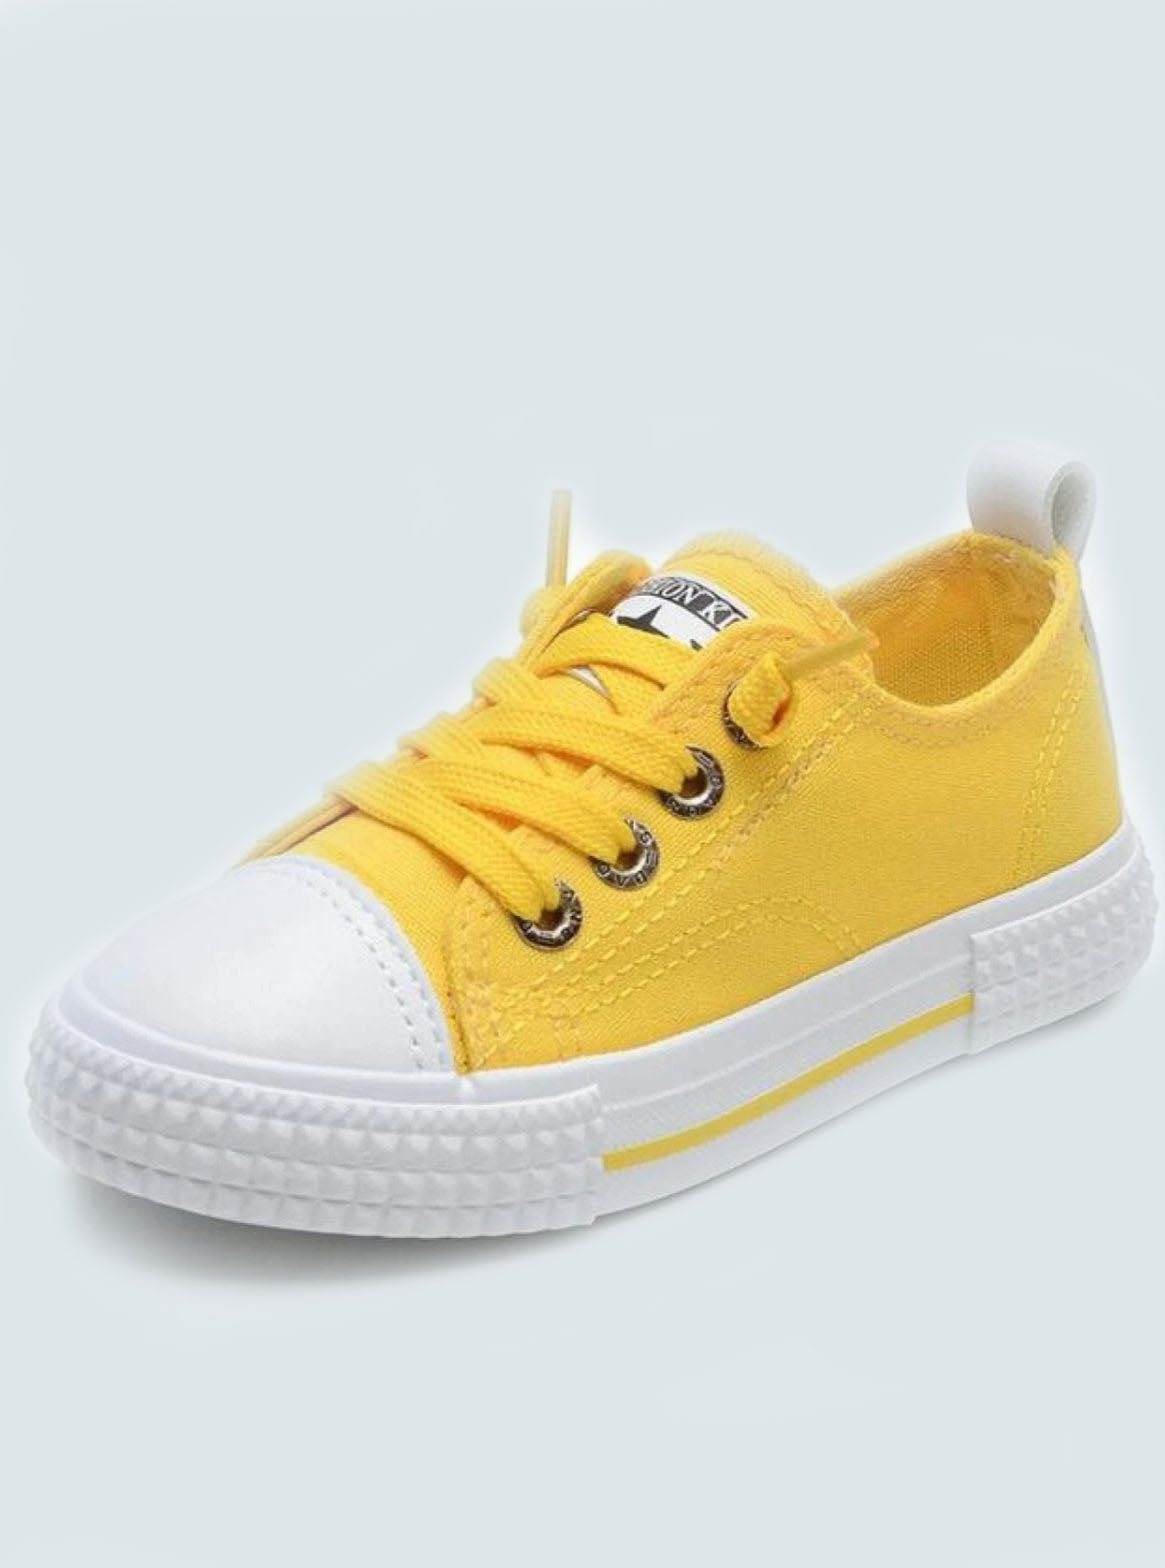 Girls Non-Slip Canvas Sneakers - Yellow / 4 - Girls Sneakers